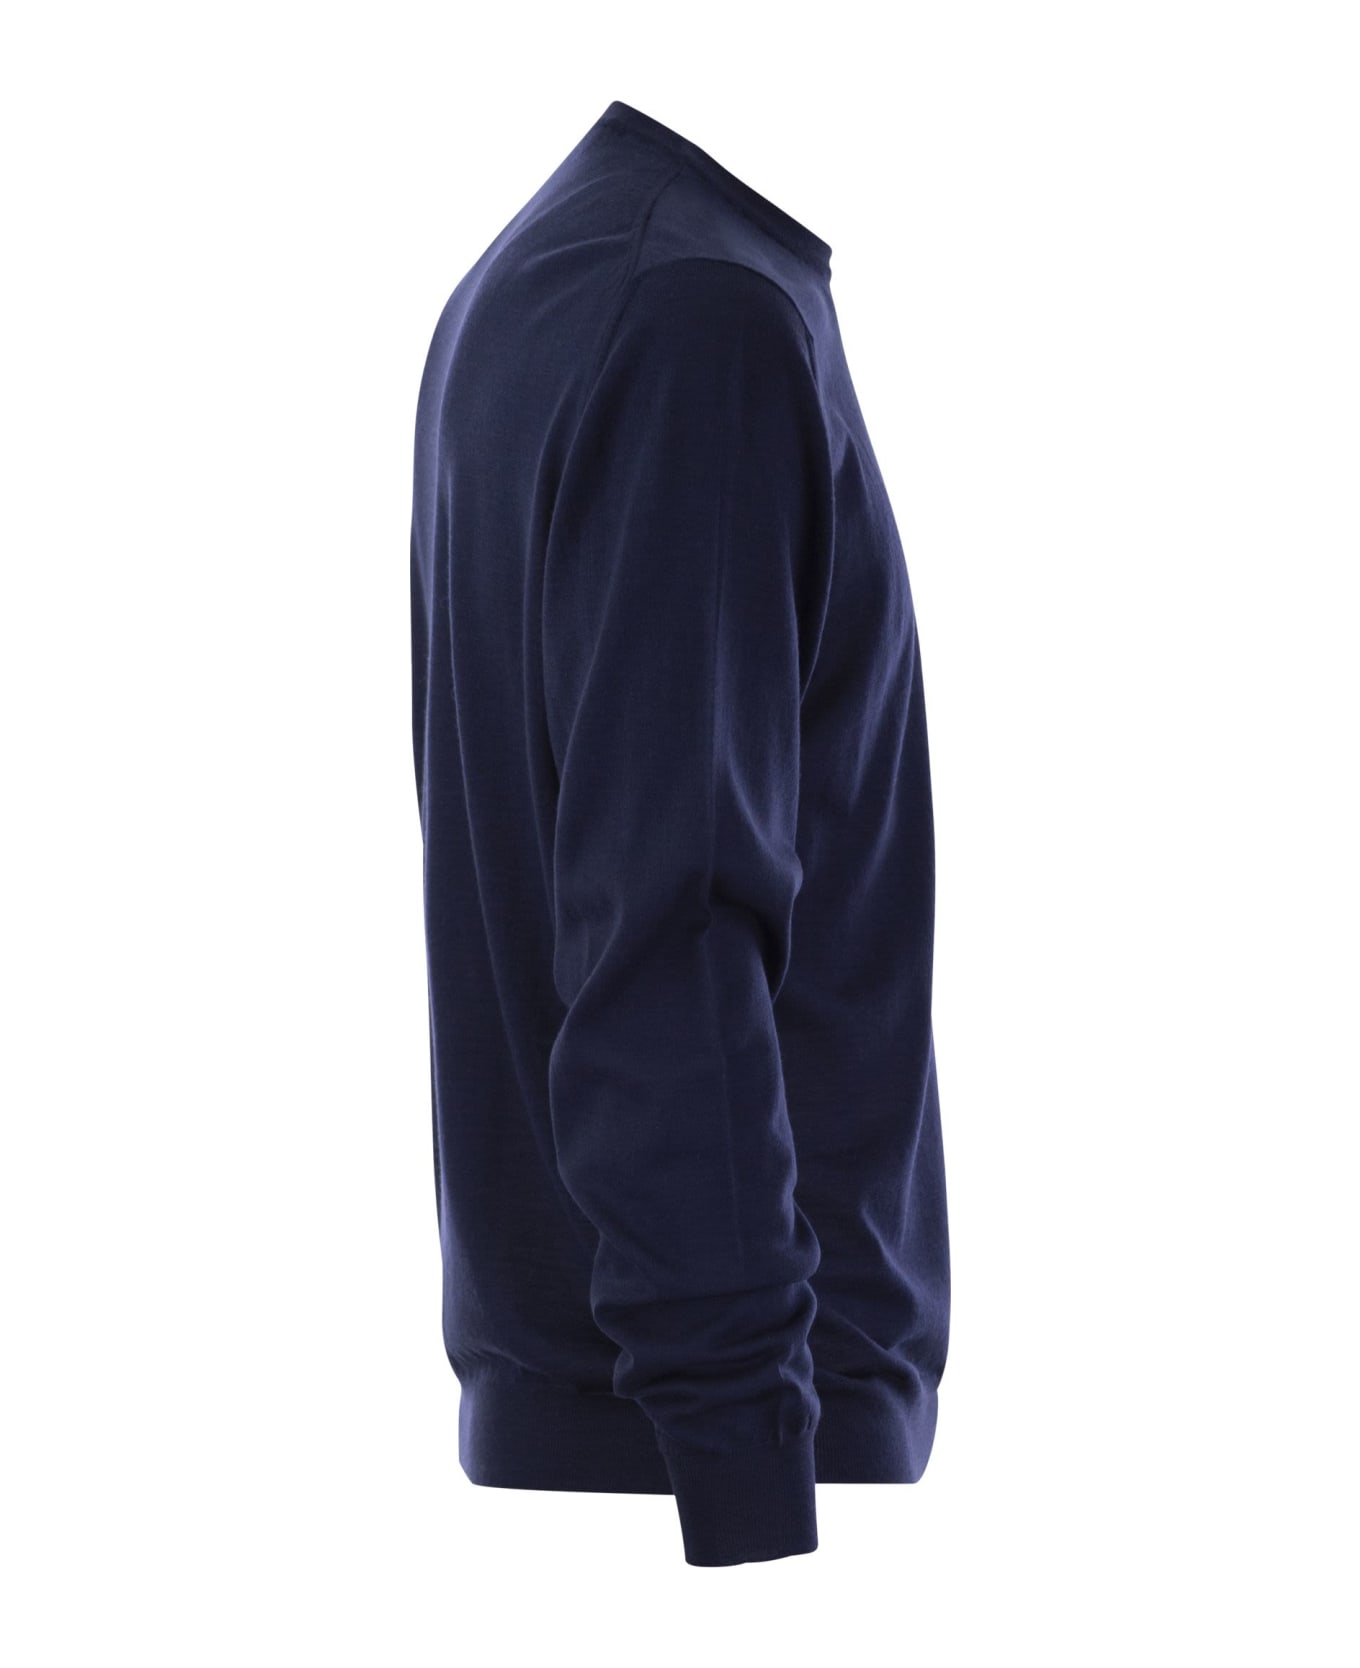 Fedeli Crew-neck Sweater In Superfine Virgin Wool - Blue